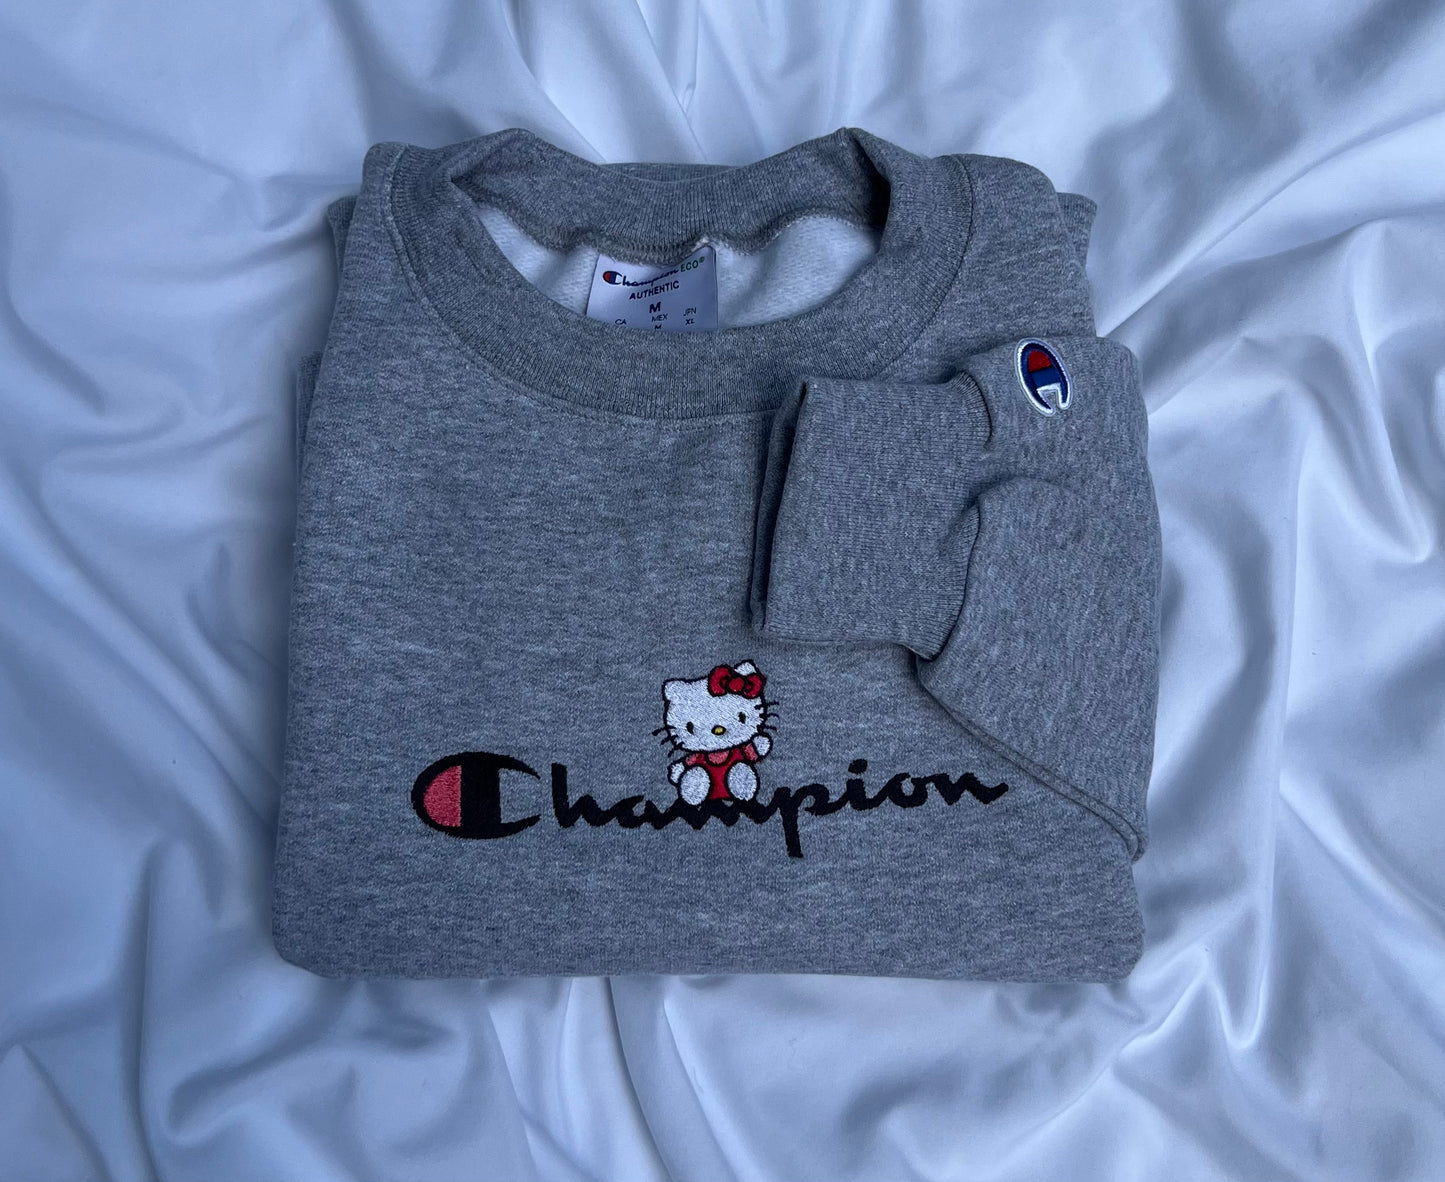 Kitty x Champion Embroidery Crewneck Sweatshirt